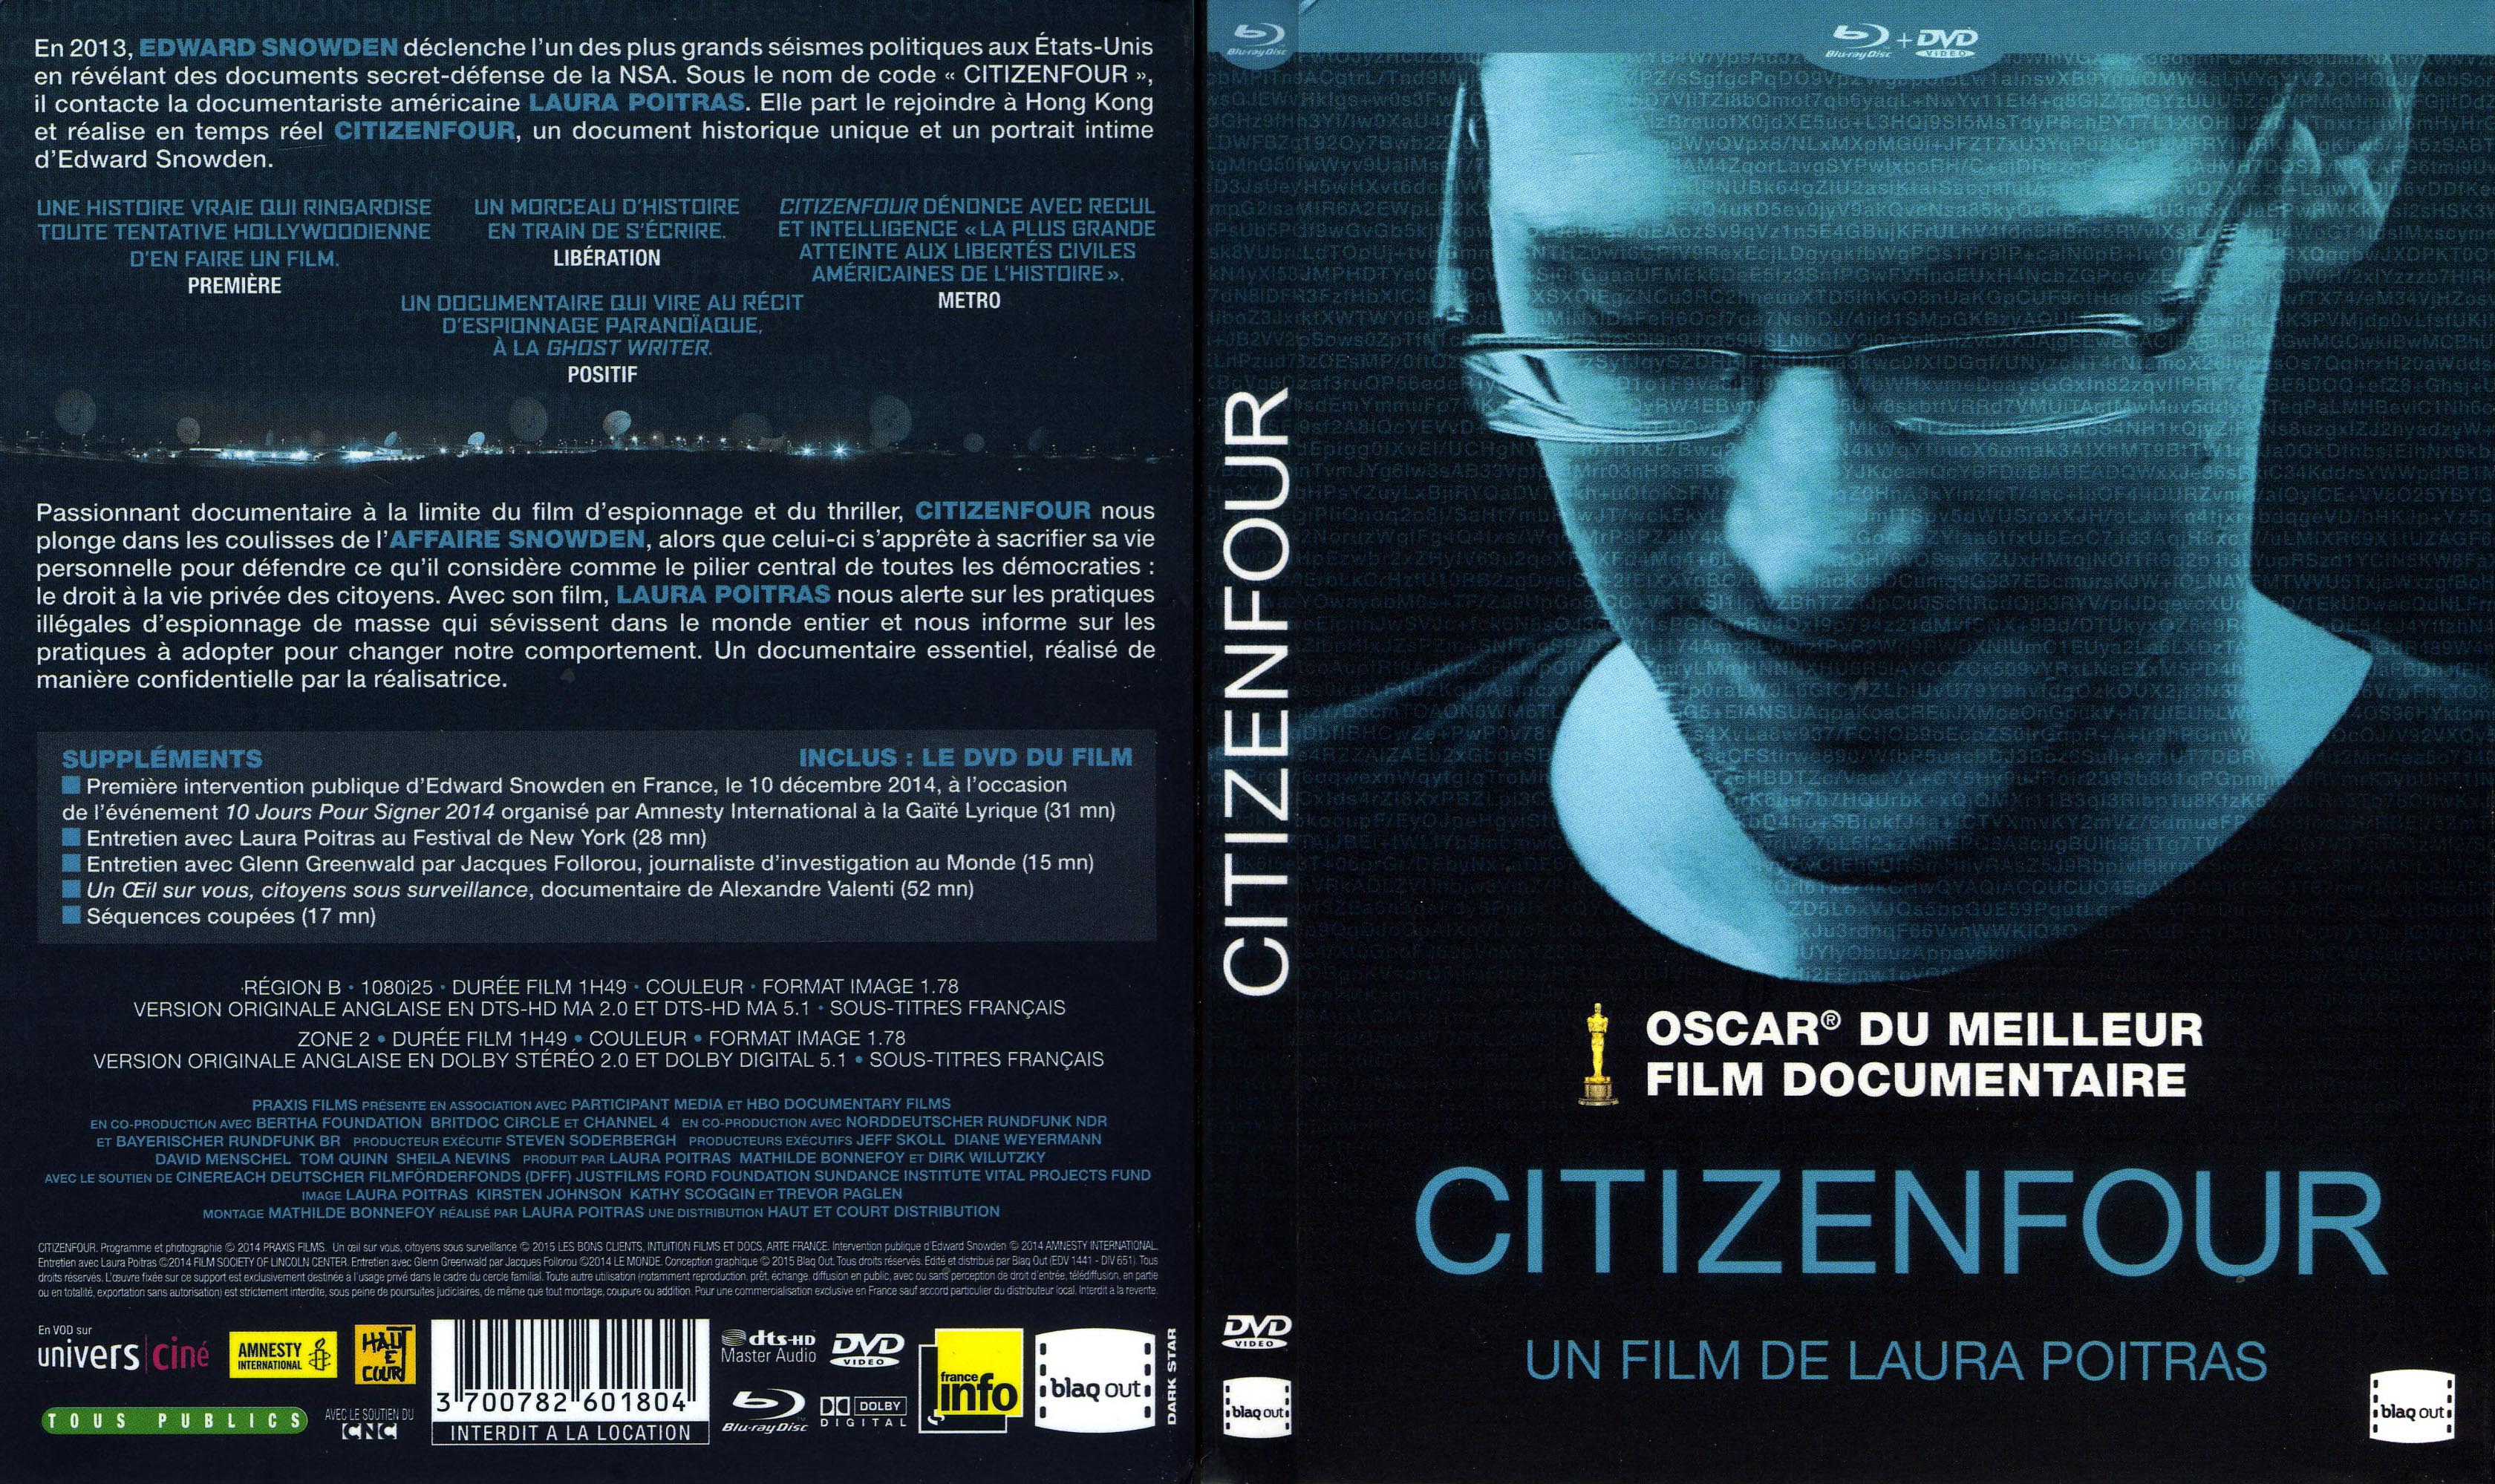 Jaquette DVD Citizenfour (BLU-RAY)